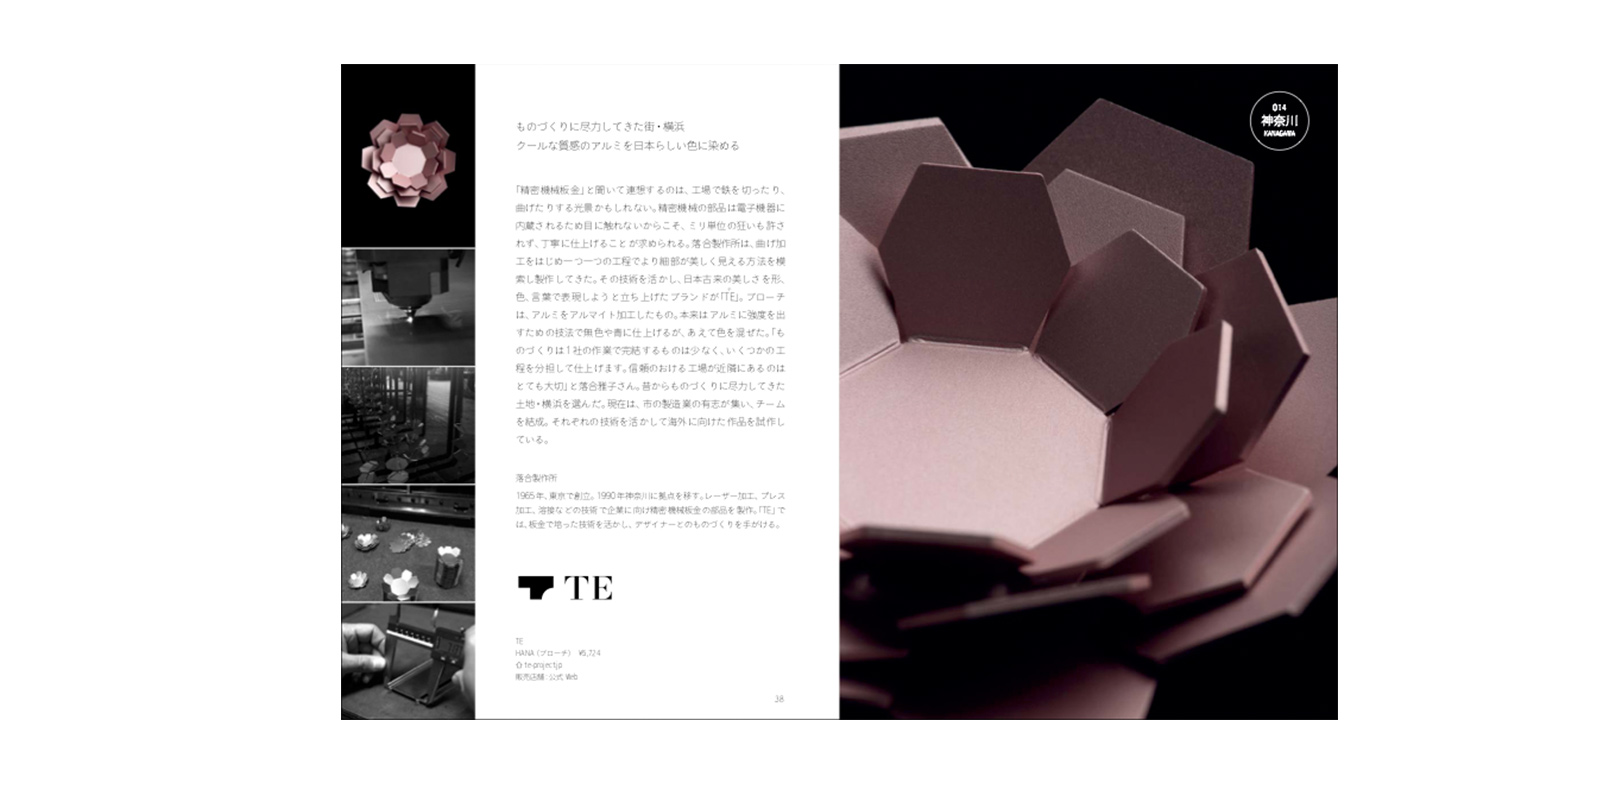 d47 MUSEUM「47 accessories 2 47都道府県のアクセサリー」展 公式書籍